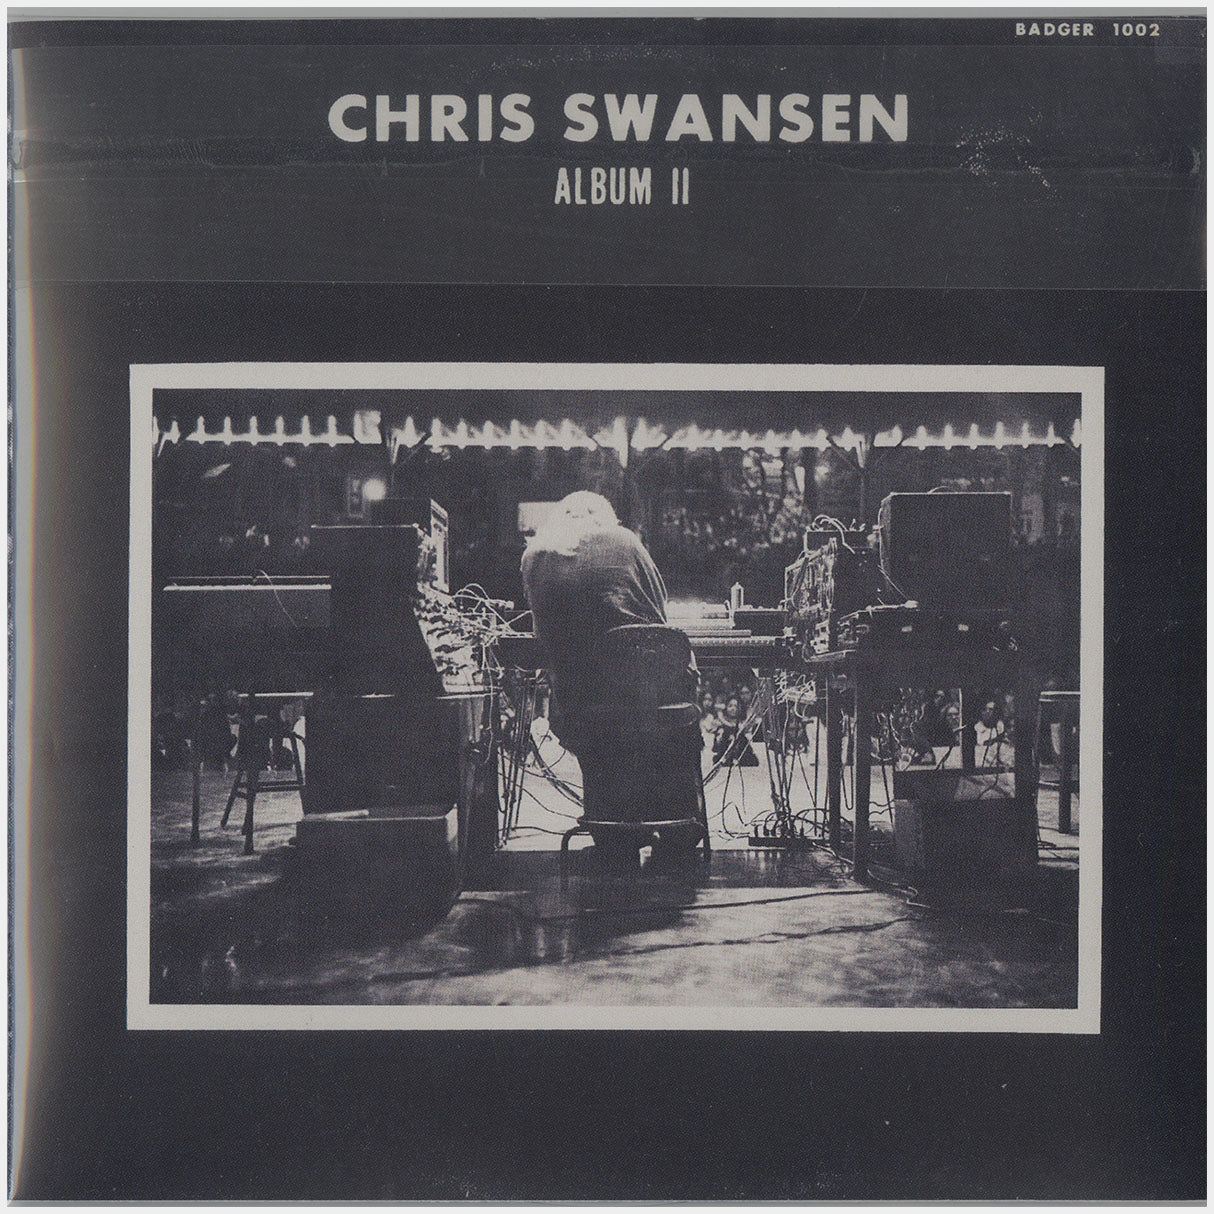 [CP 110-110.5 CD] Chris Swansen; Pulaski Skyway, Album II, The Sound Of The Moog